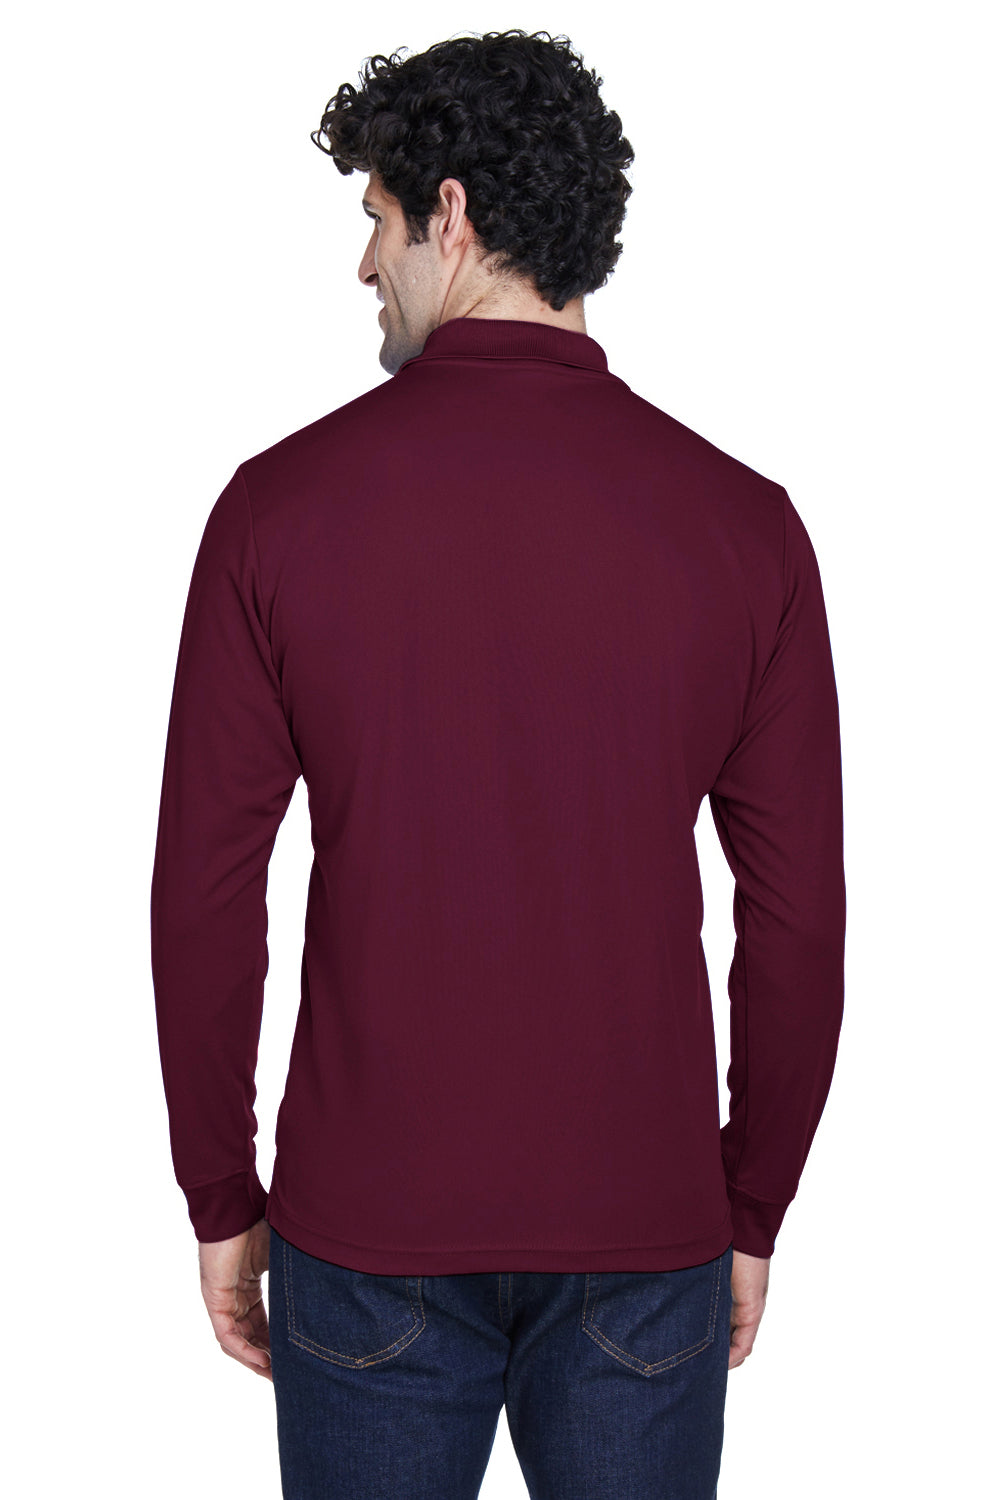 Core 365 88192 Mens Pinnacle Performance Moisture Wicking Long Sleeve Polo Shirt Burgundy Back